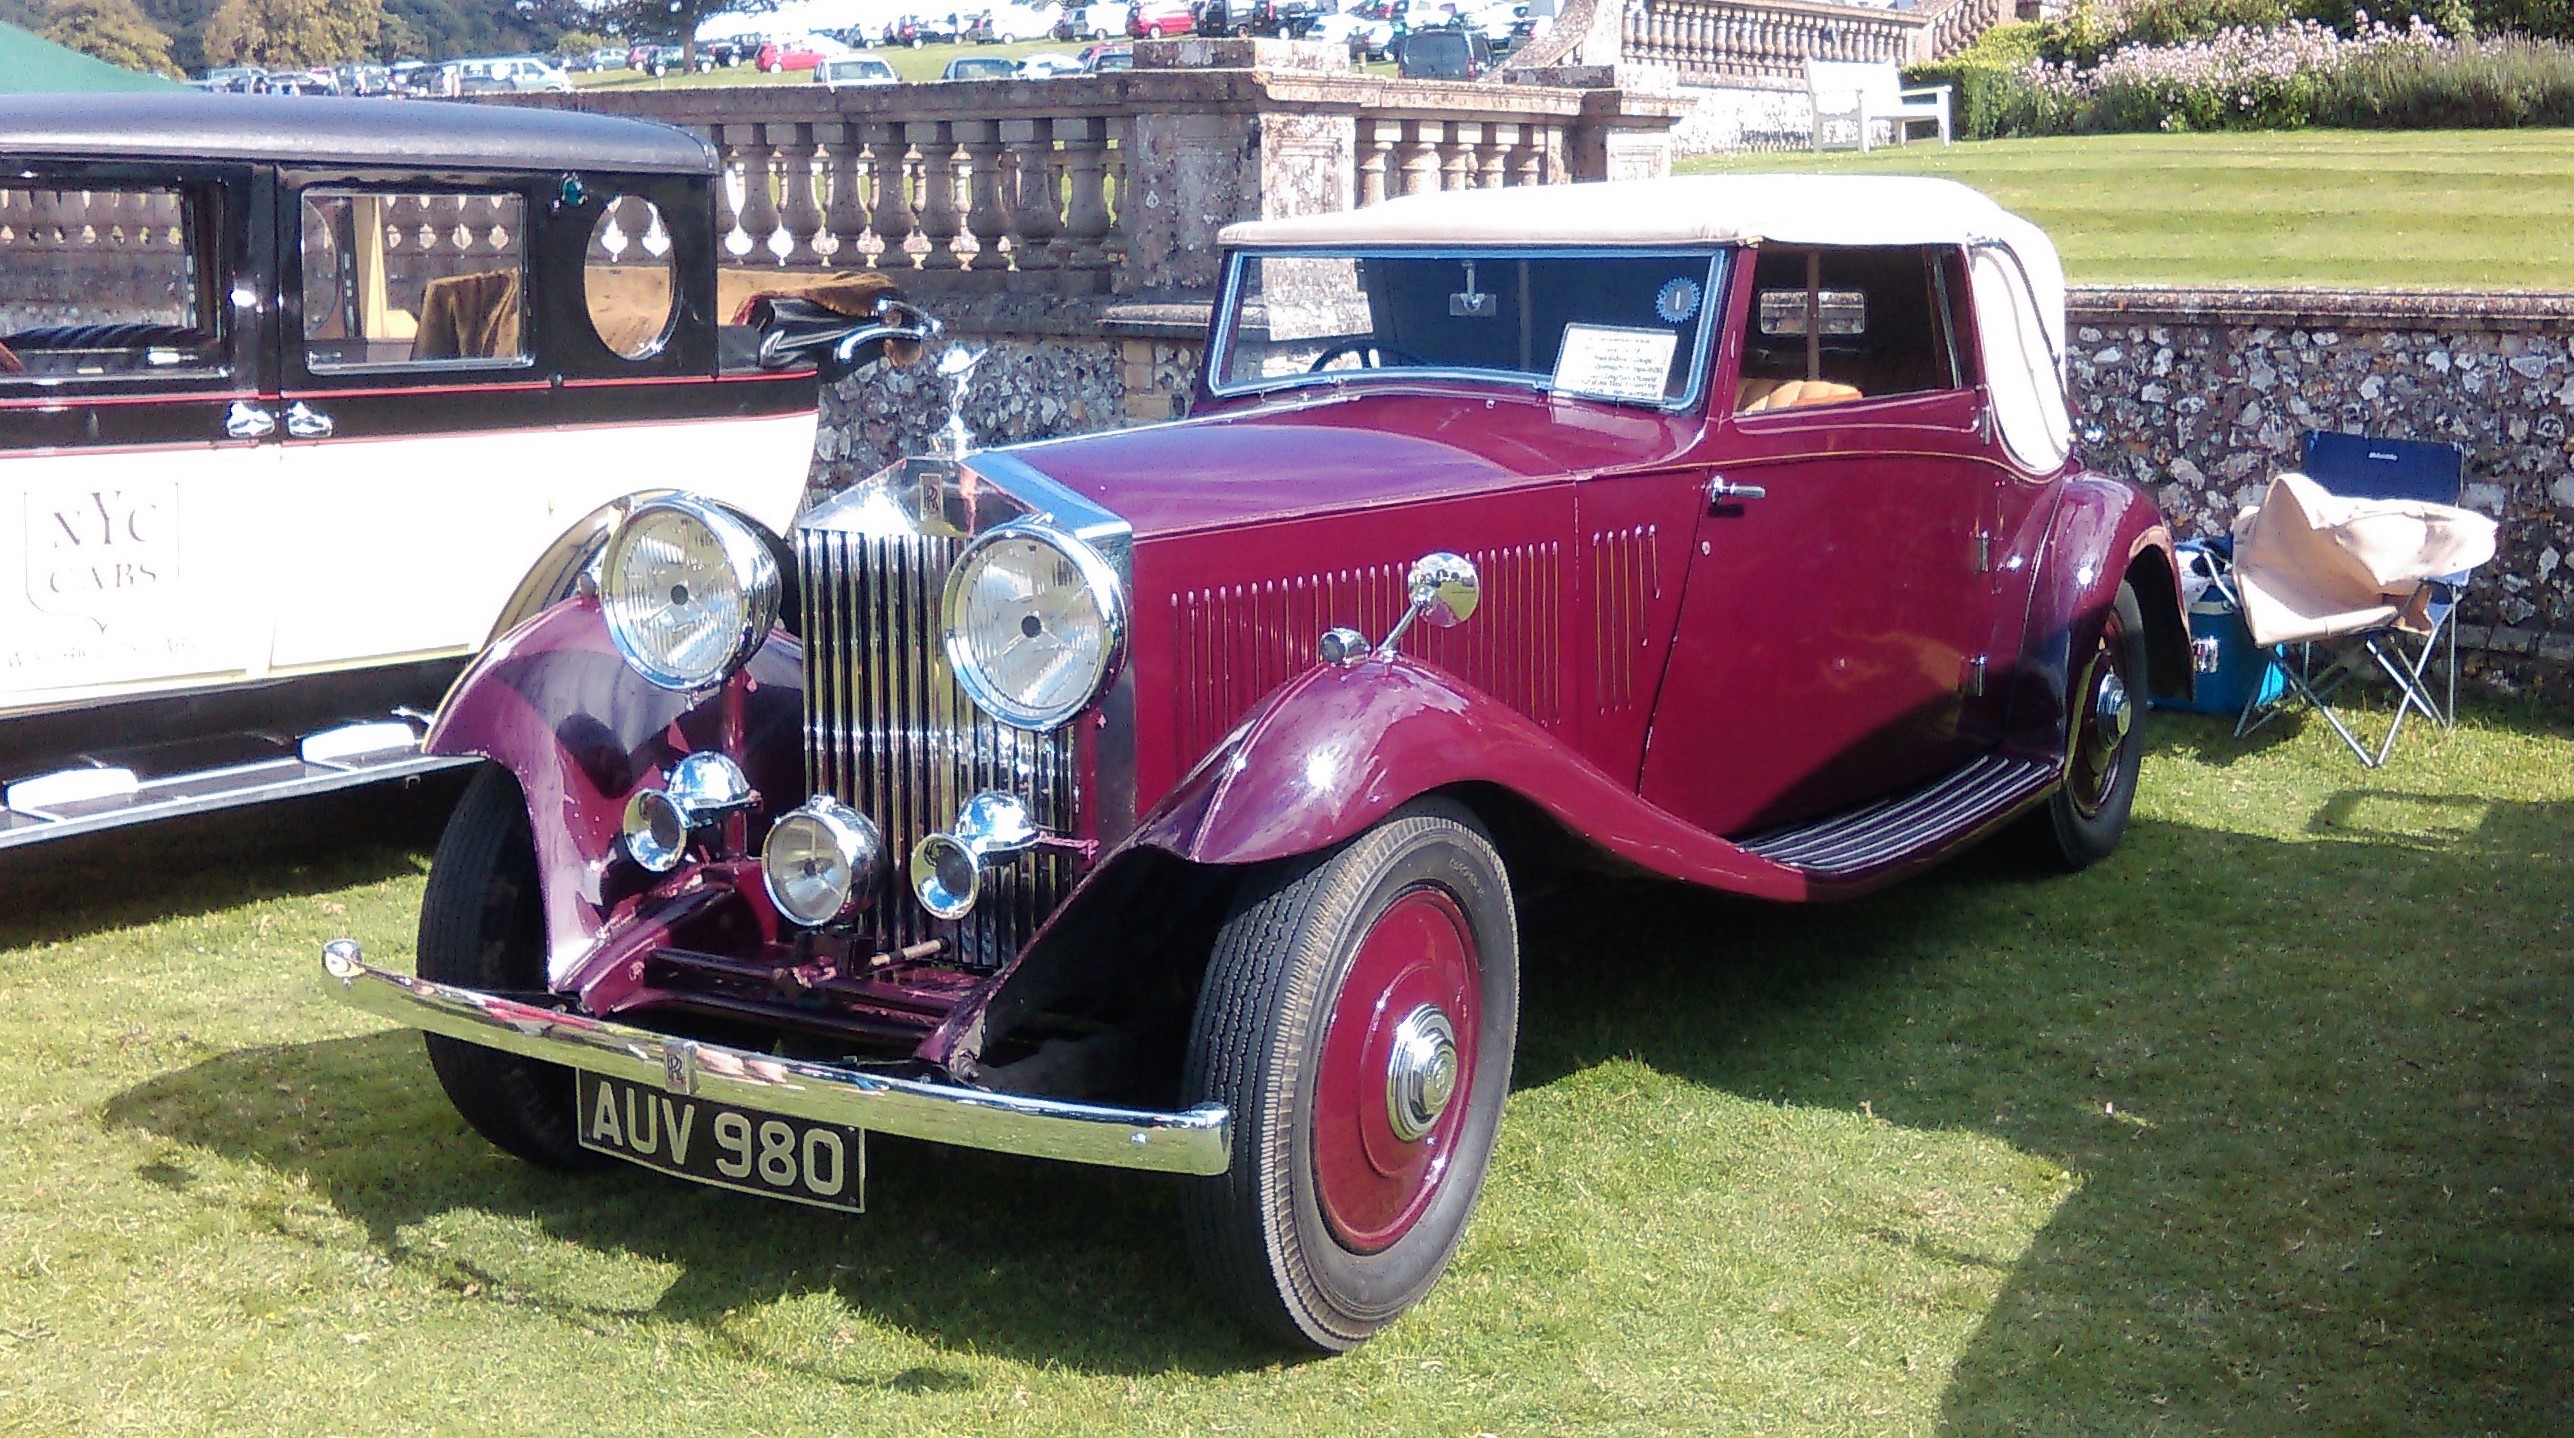 1933 Rolls Royce for sale H&H Classics Auction Buxton Pavilion Gardens 6th October